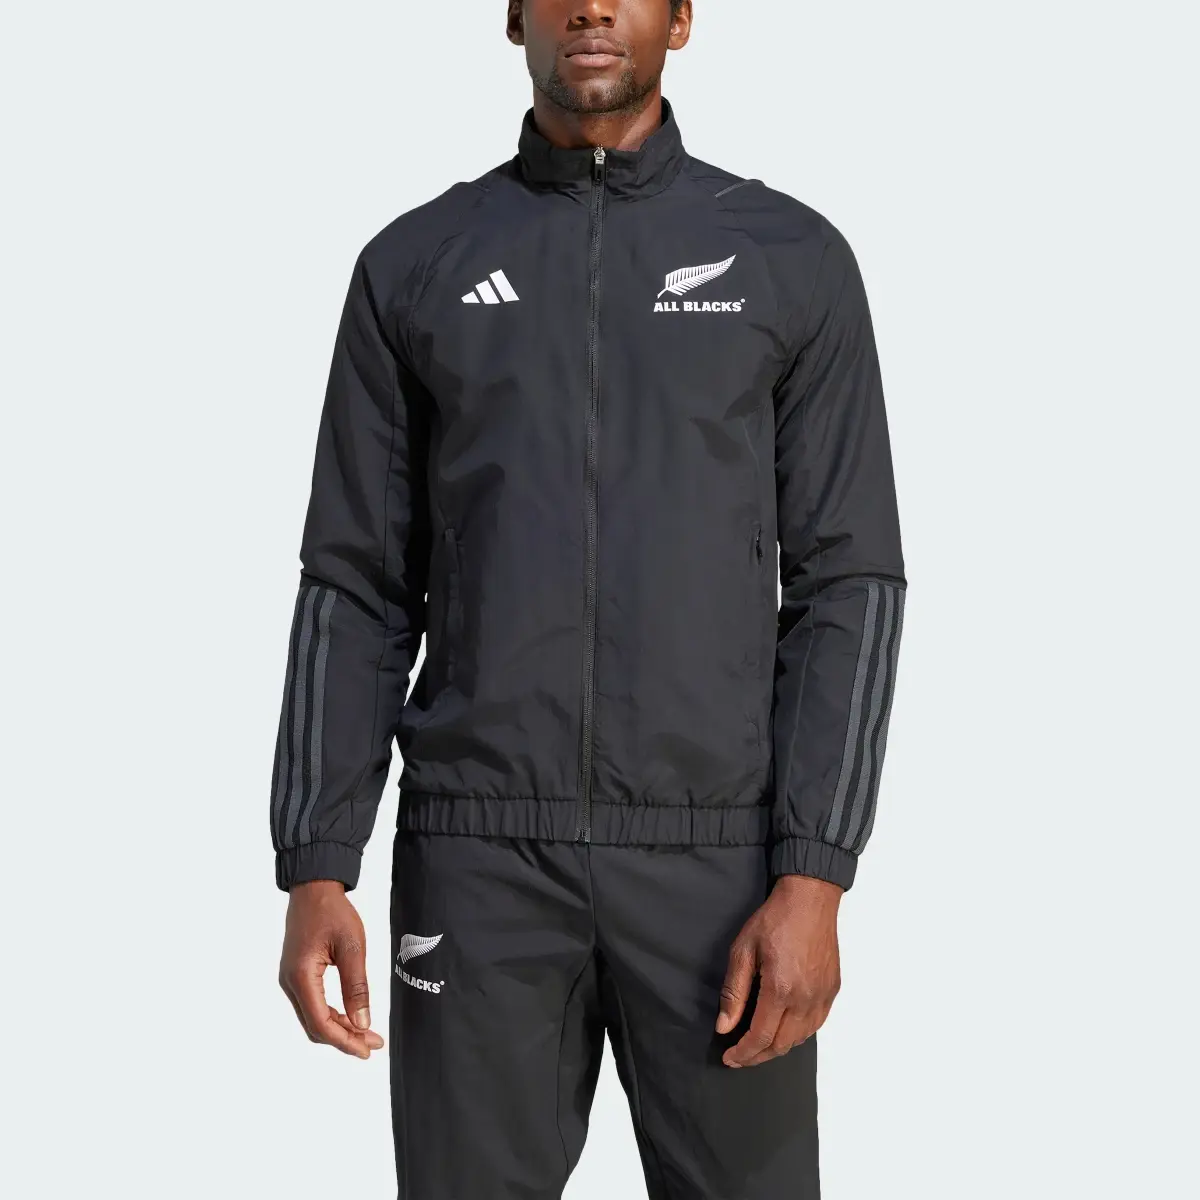 Adidas All Blacks Rugby Track Suit Jacket. 1